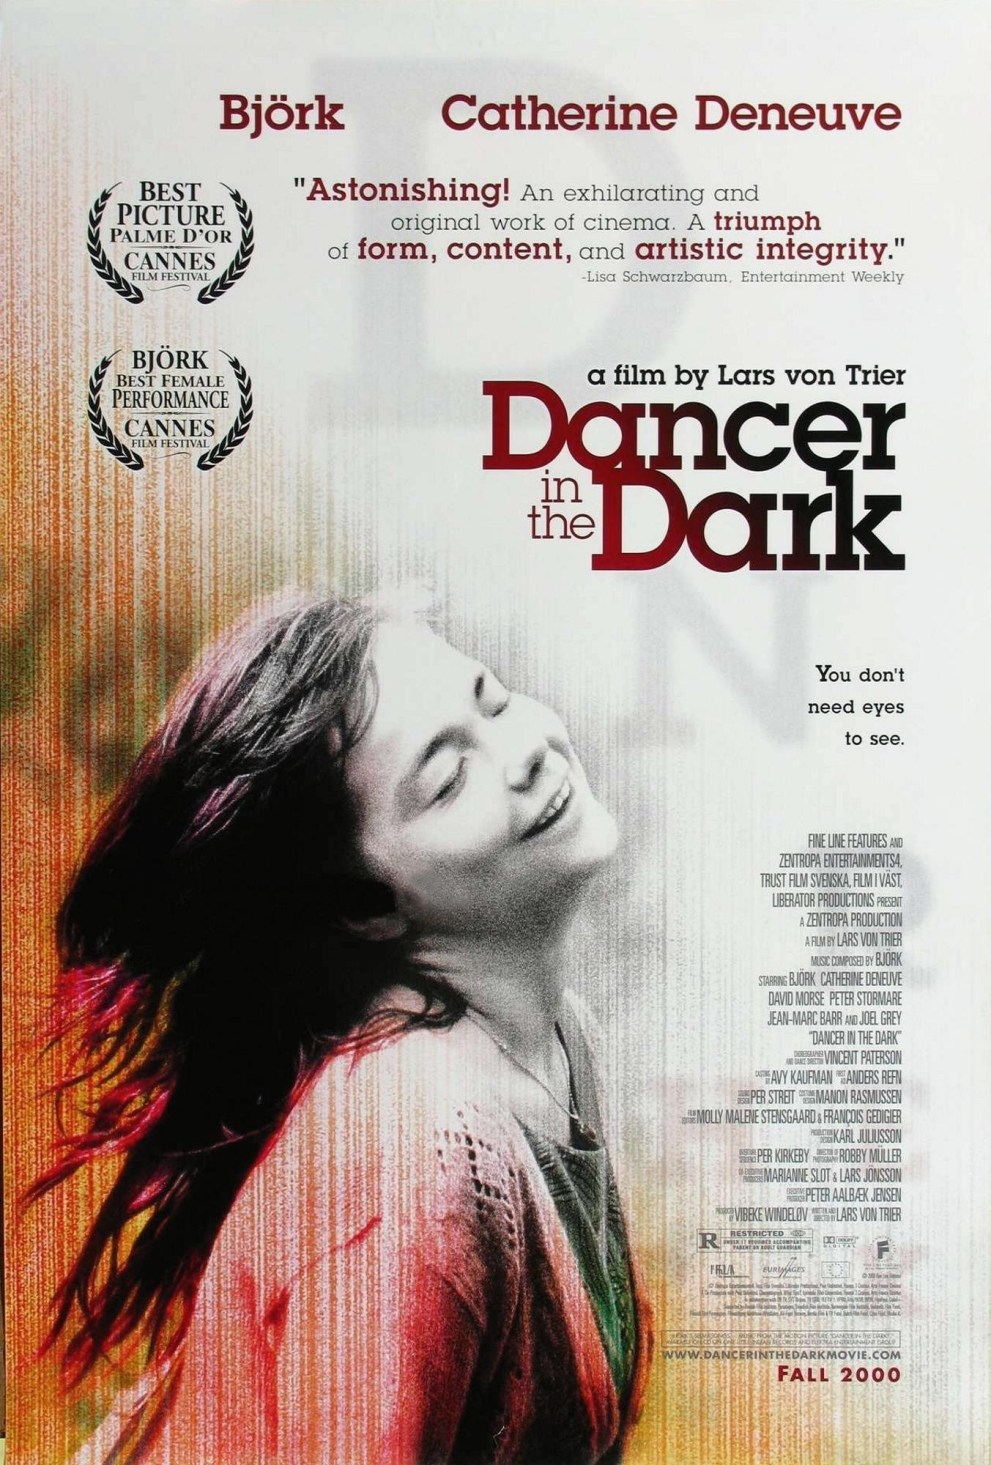 dancer-in-the-dark-poster.jpg